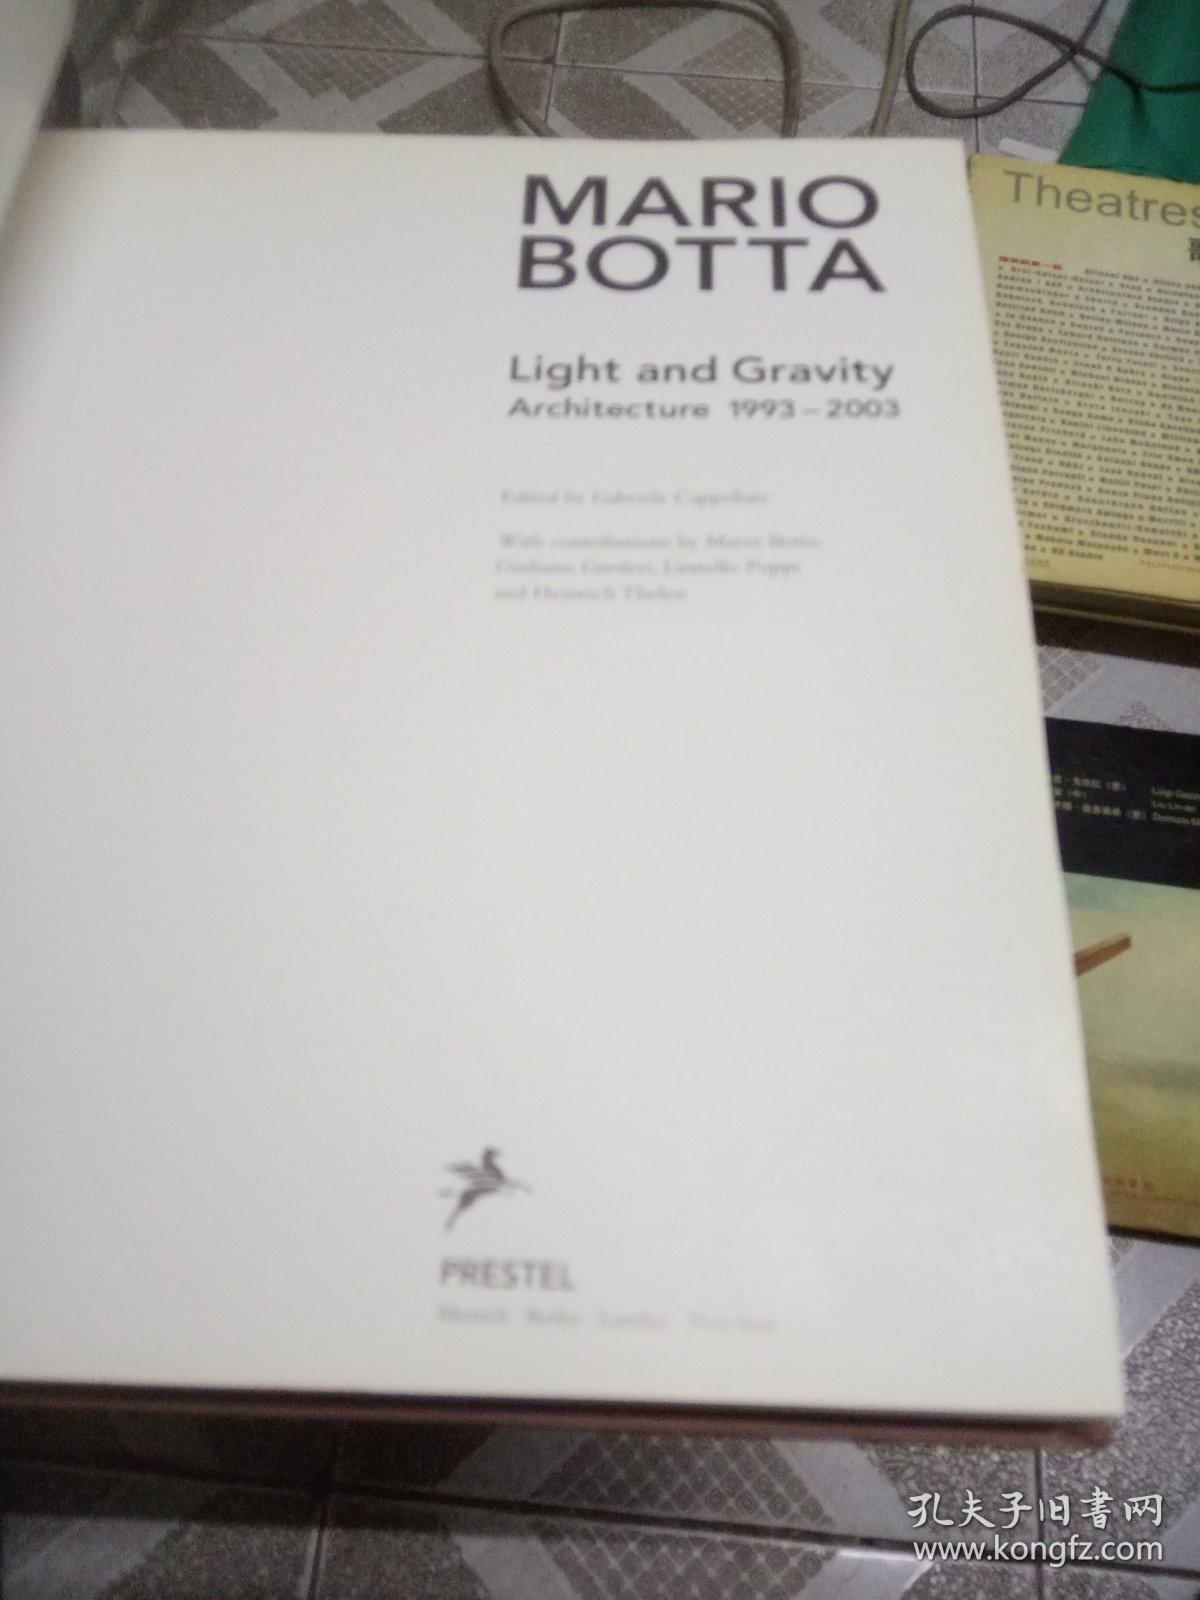 Mario Botta, Light And Gravity ARCHITECTURE 1993-2003